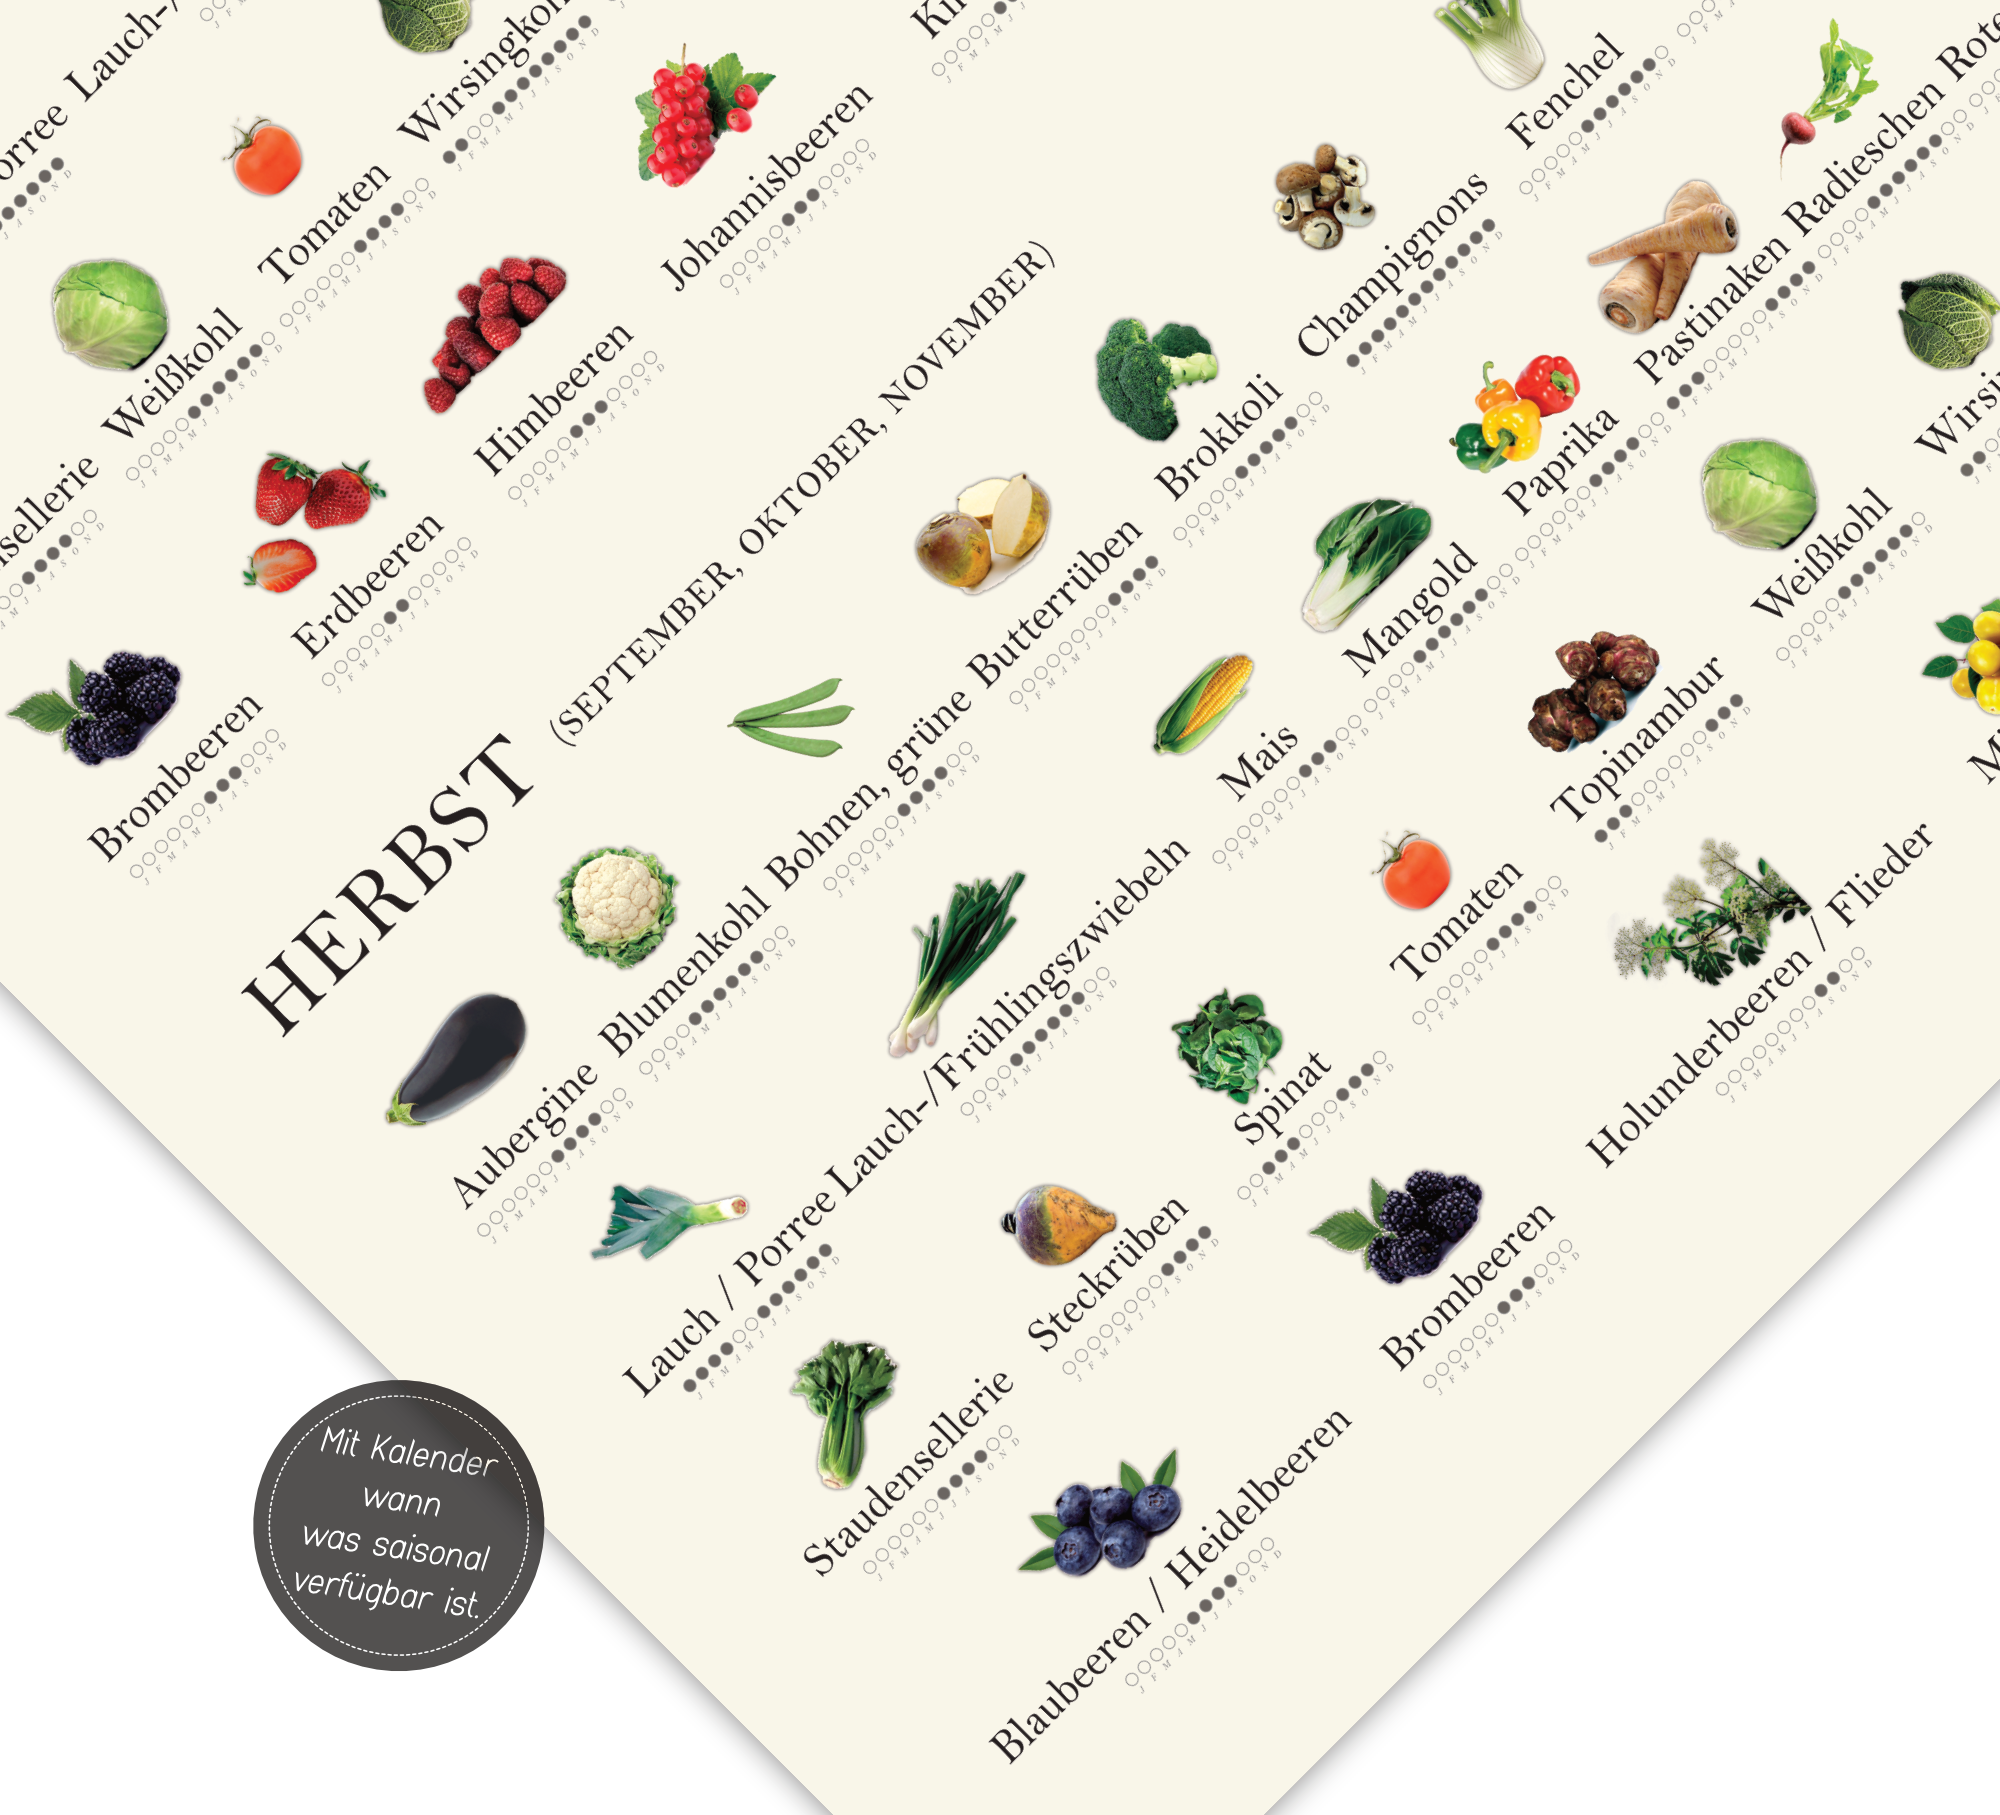 Saisonkalender Obst und MrTKBooker Poster – Gemüse